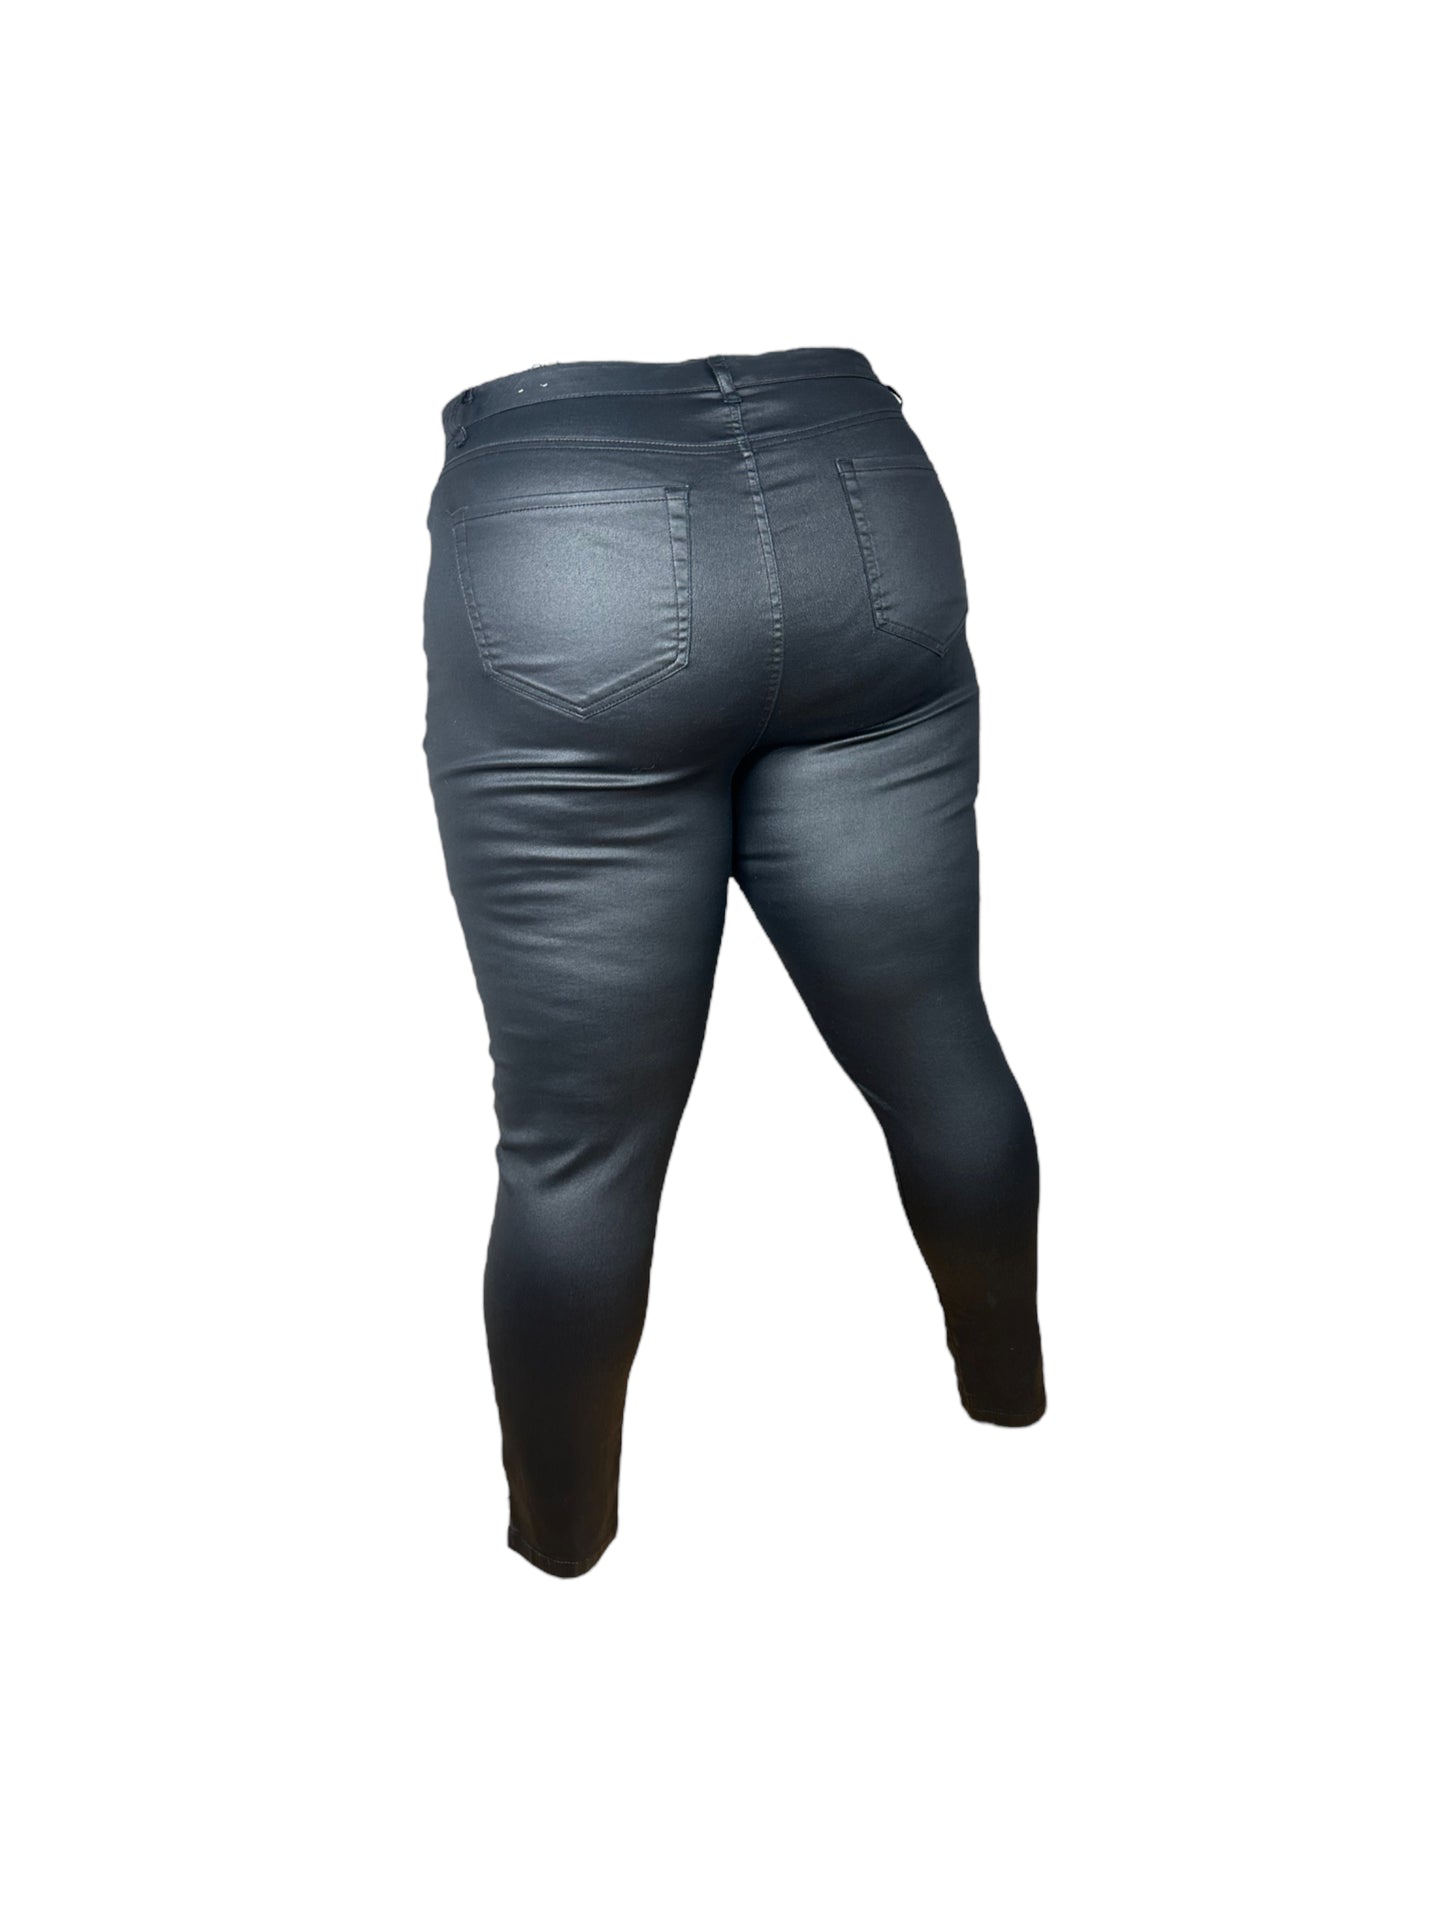 Black Coated Jeans w/ Zipper Ankle Details